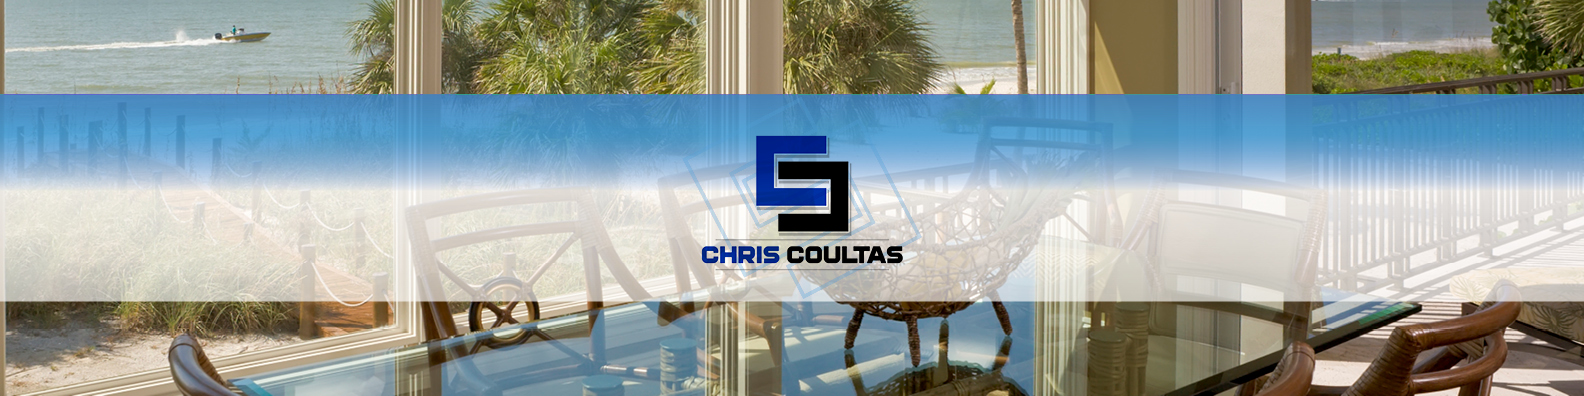 20TJAK-DC FL Social Media Header - Chris Coultas_LinkedIn_FINAL (1)